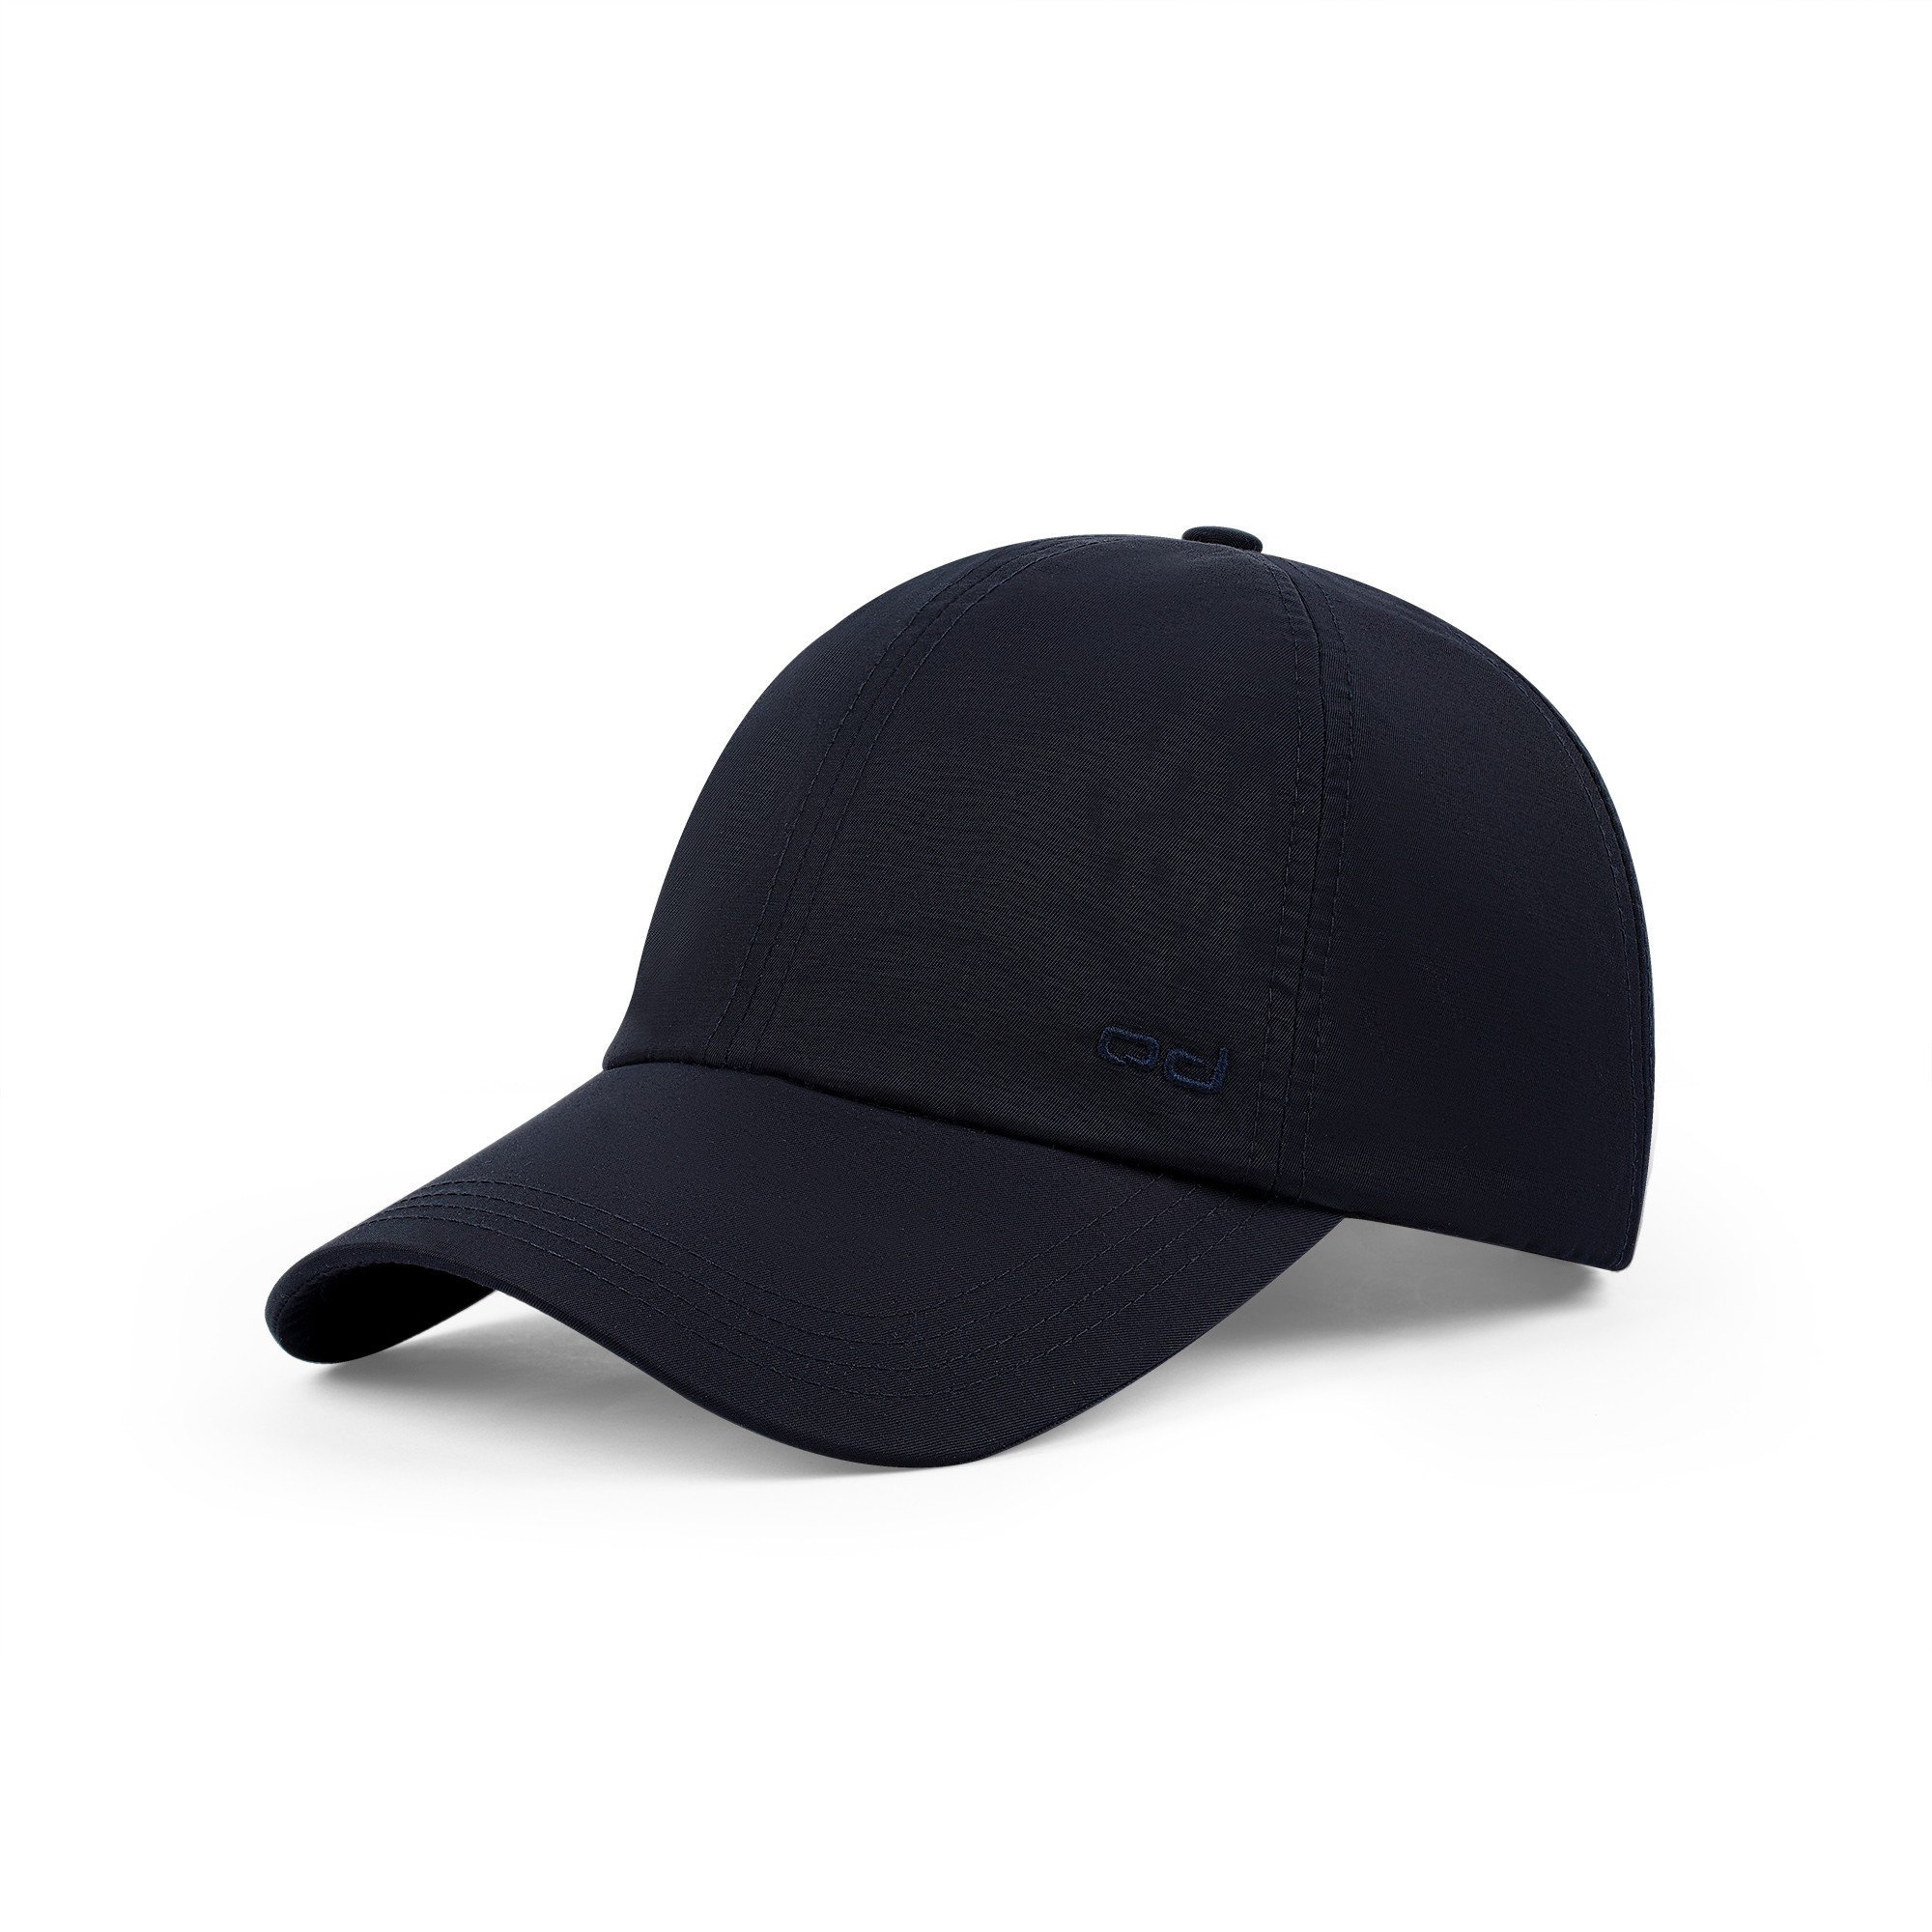 All-Time Şapka (Ayarlanabilir) - Siyah